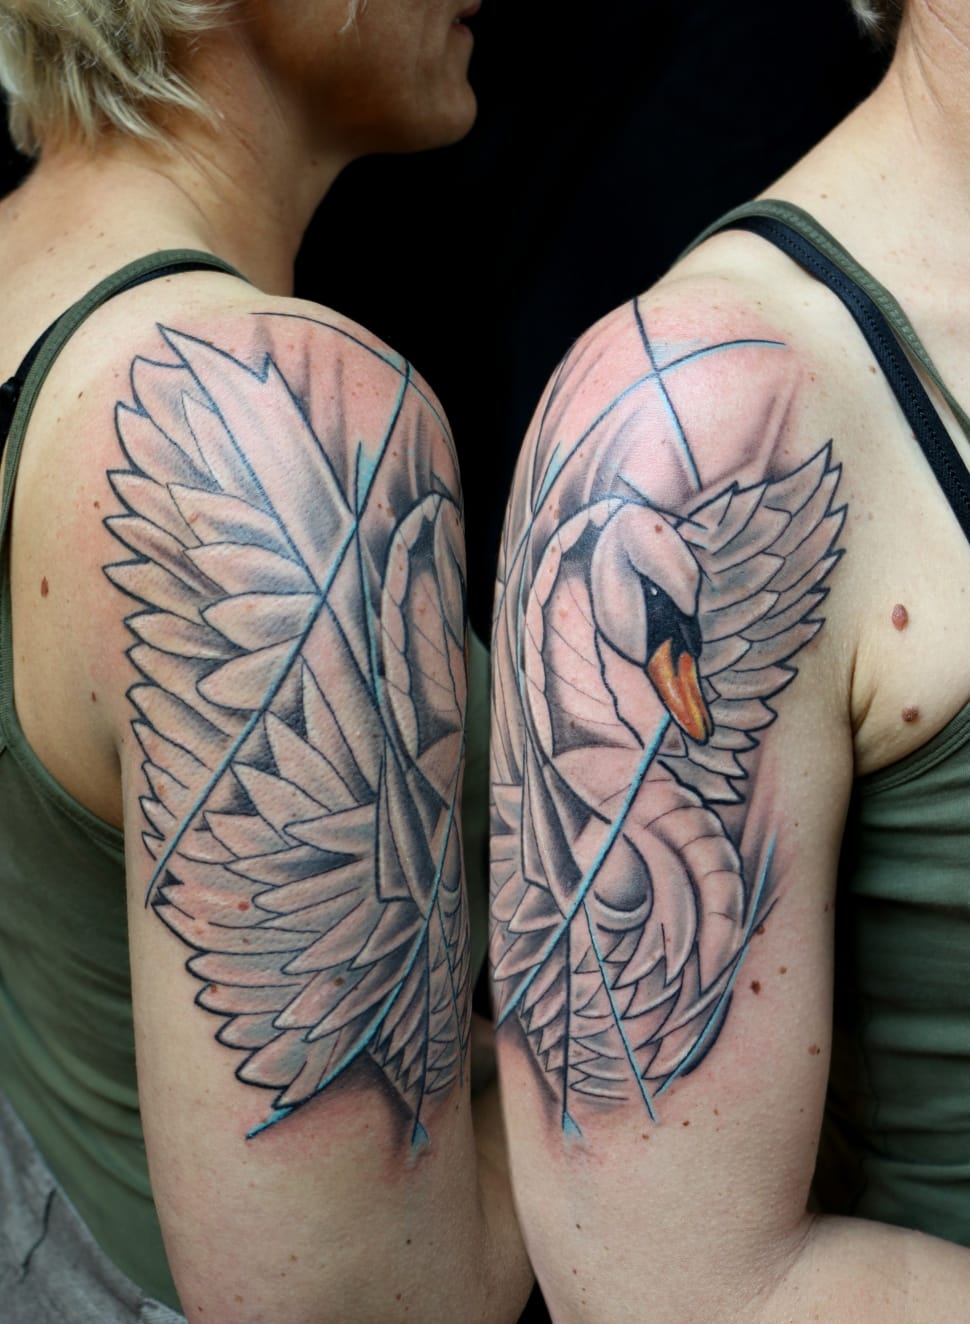 Flower arm tattoo | Flower tattoo shoulder, Shoulder tattoos for women,  Flower tattoo arm